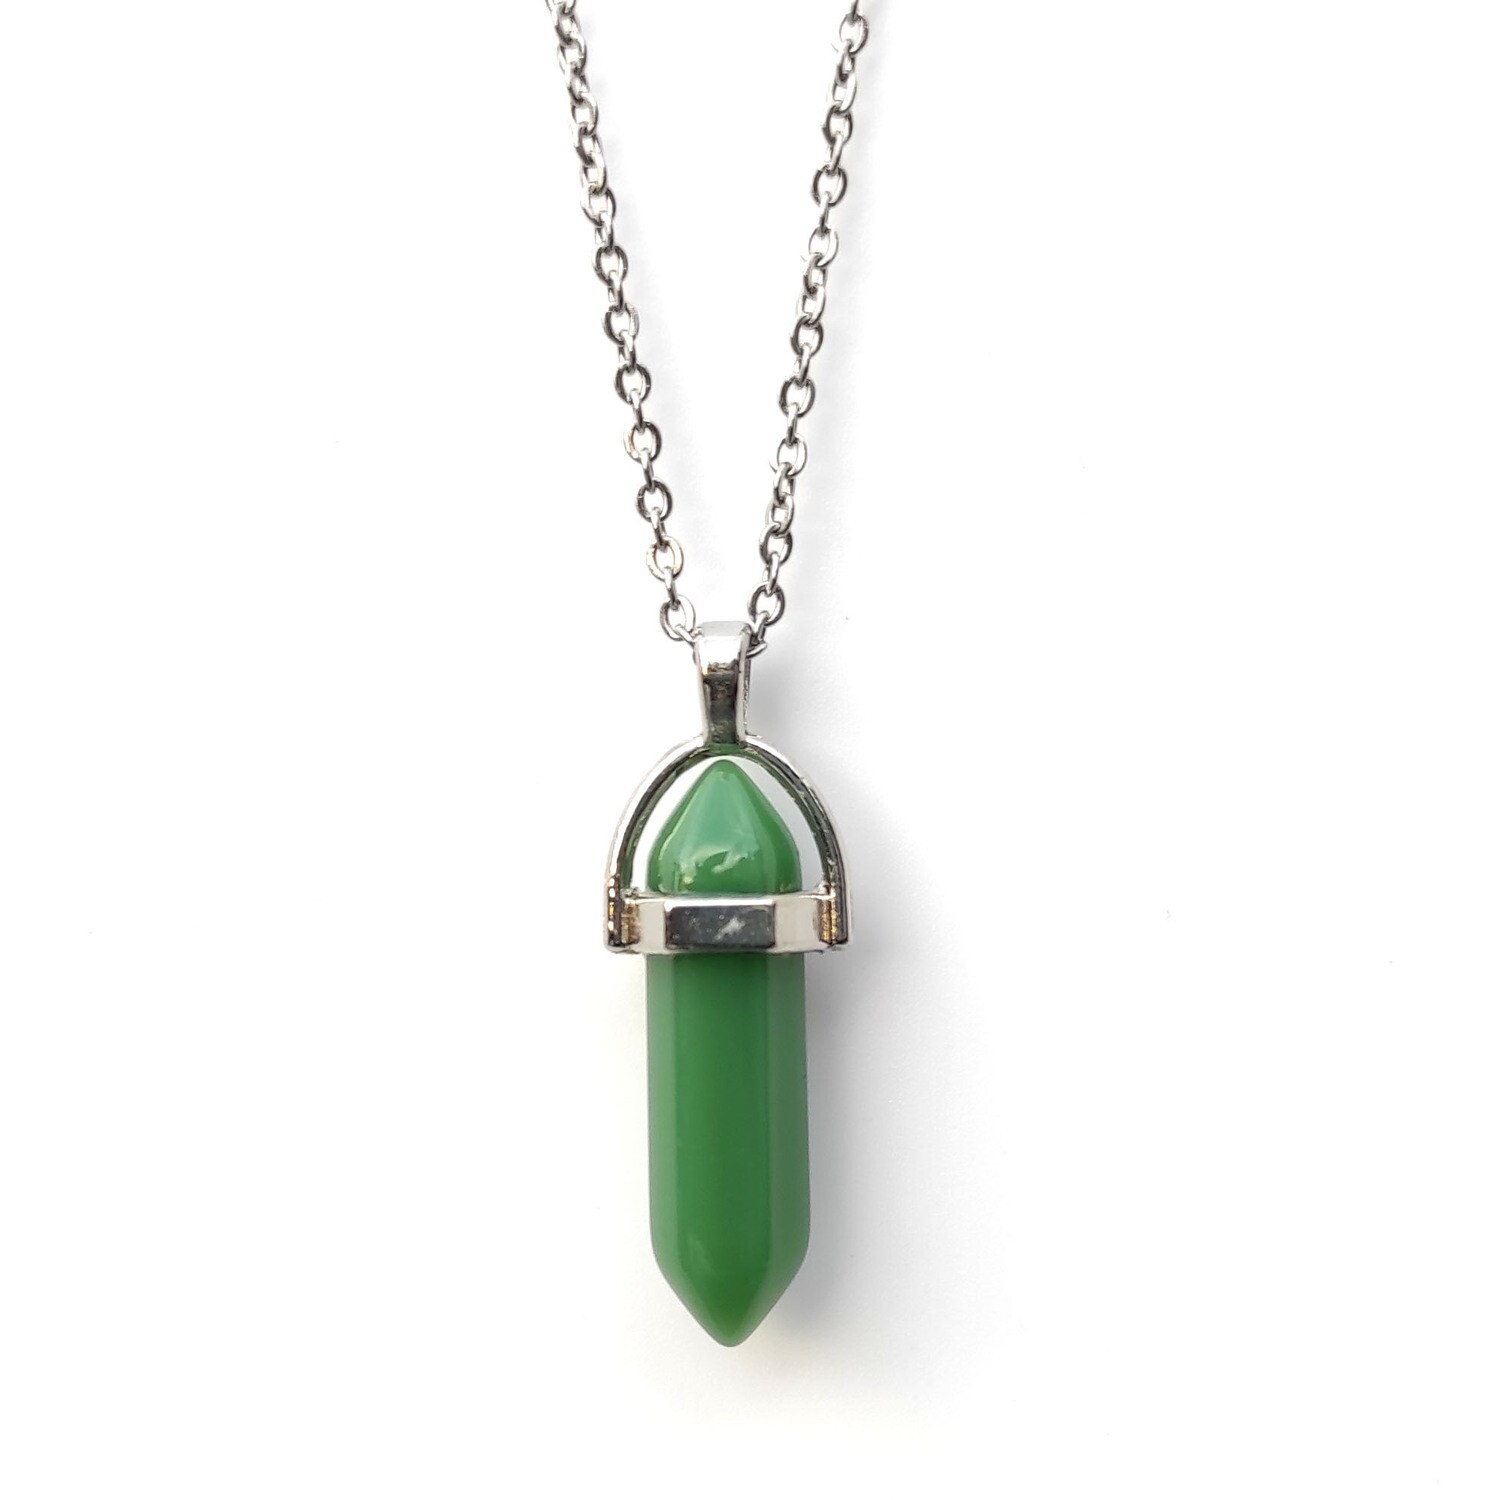 Green Aventurine pendant gemstone necklace